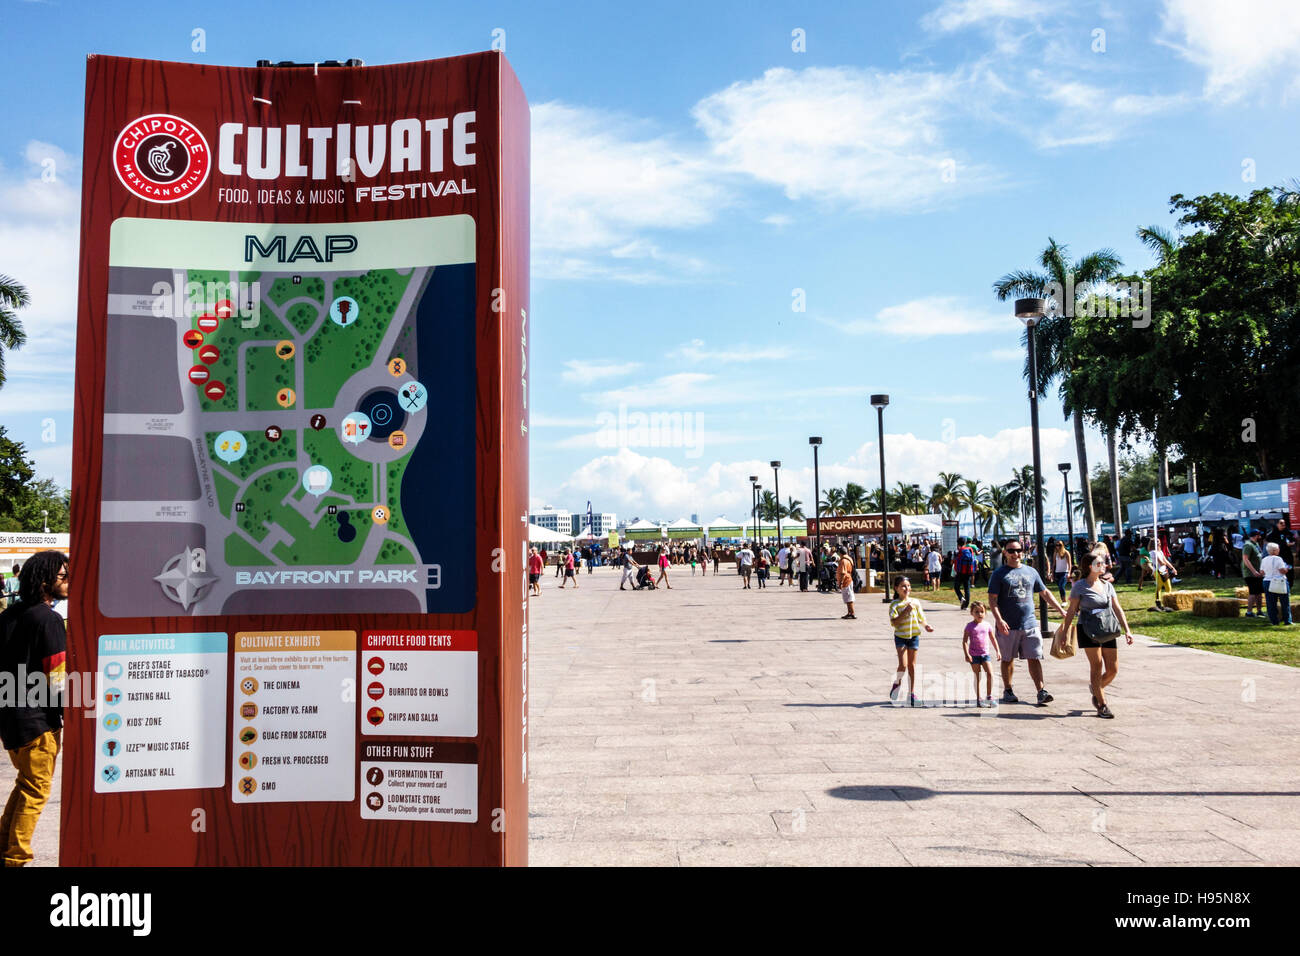 Miami Florida,Bayfront Park,Chipotle Cultivate Festival,MAP,FL161113055 Foto de stock